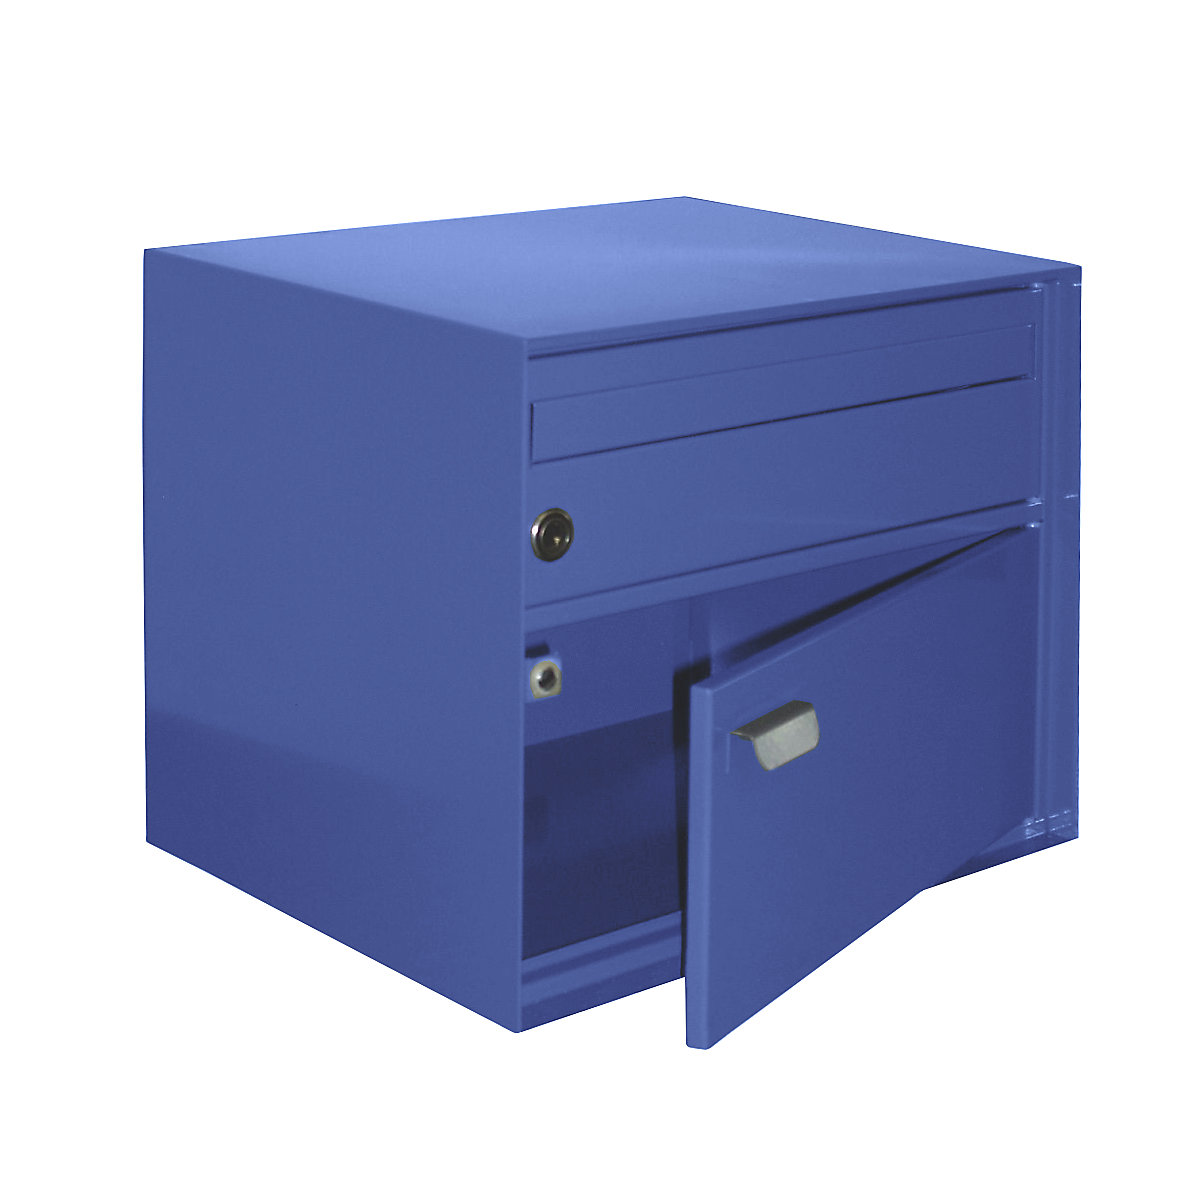 Letter box, WxHxD 390 x 315 x 310 mm